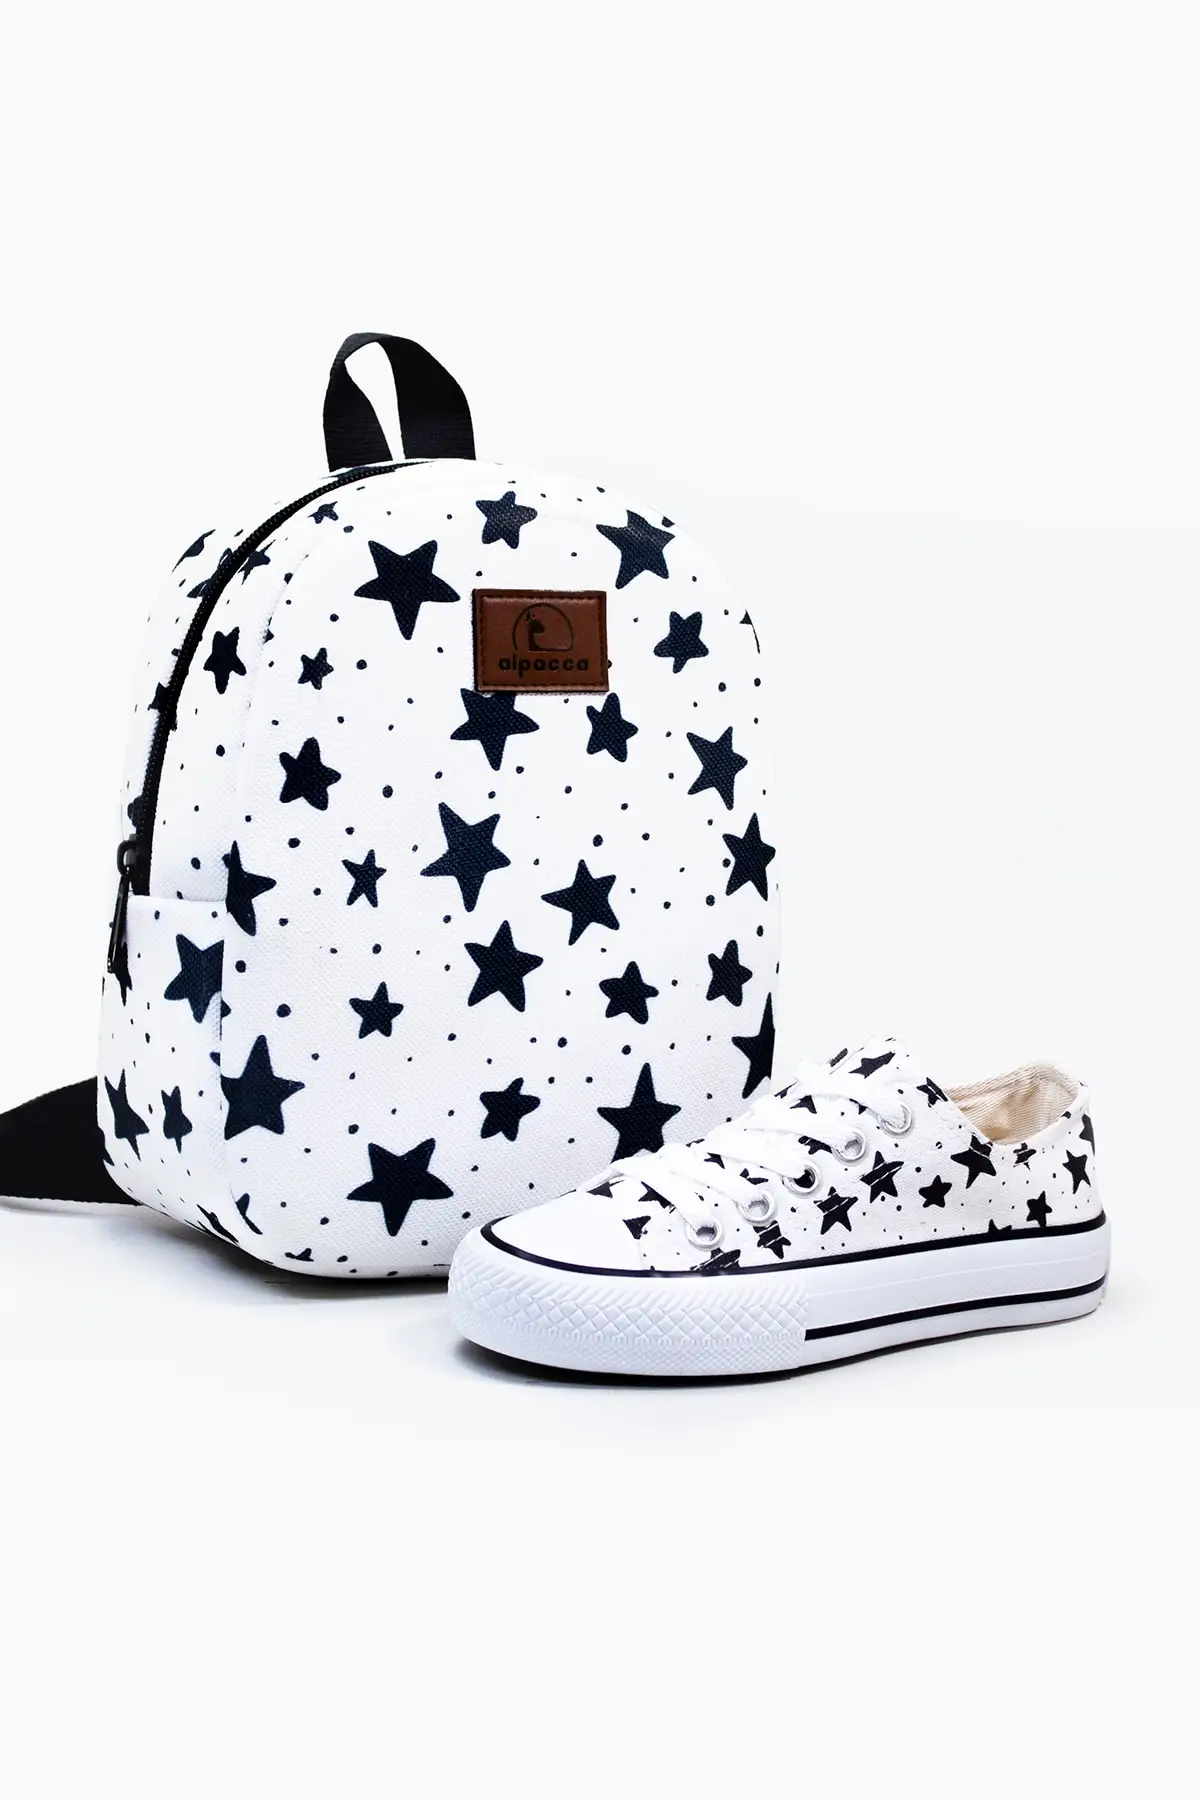 Okulun Star Children Shoes and Handbag Set